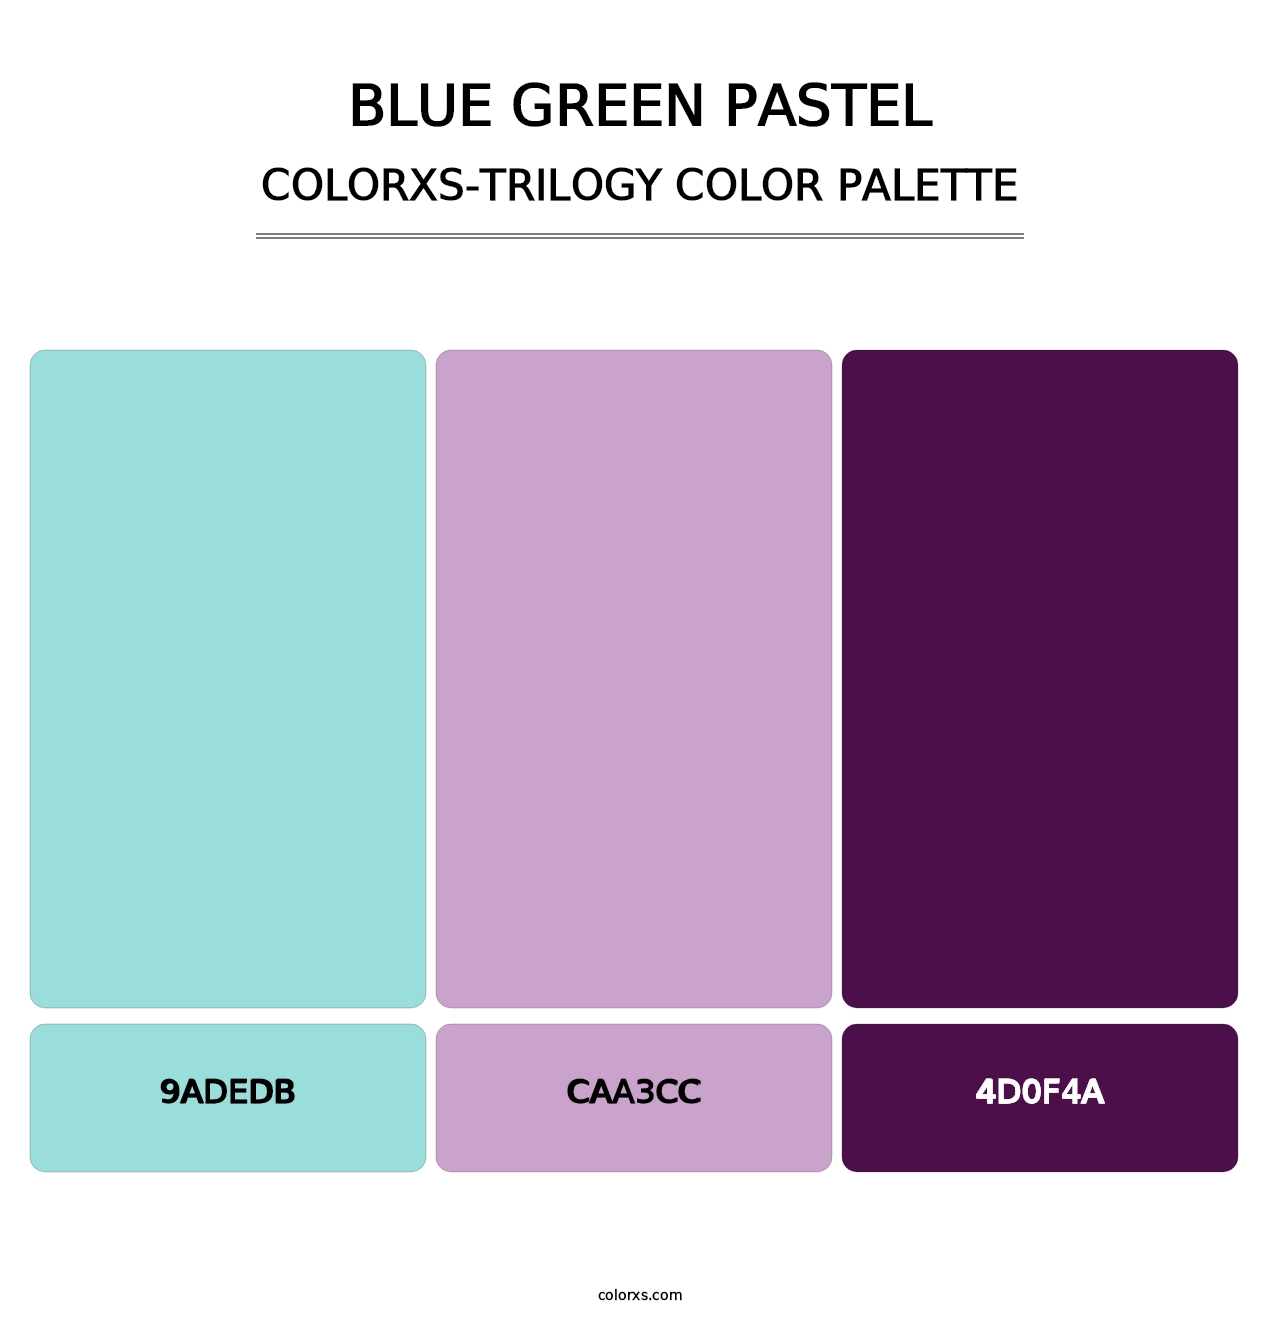 Blue Green Pastel - Colorxs Trilogy Palette